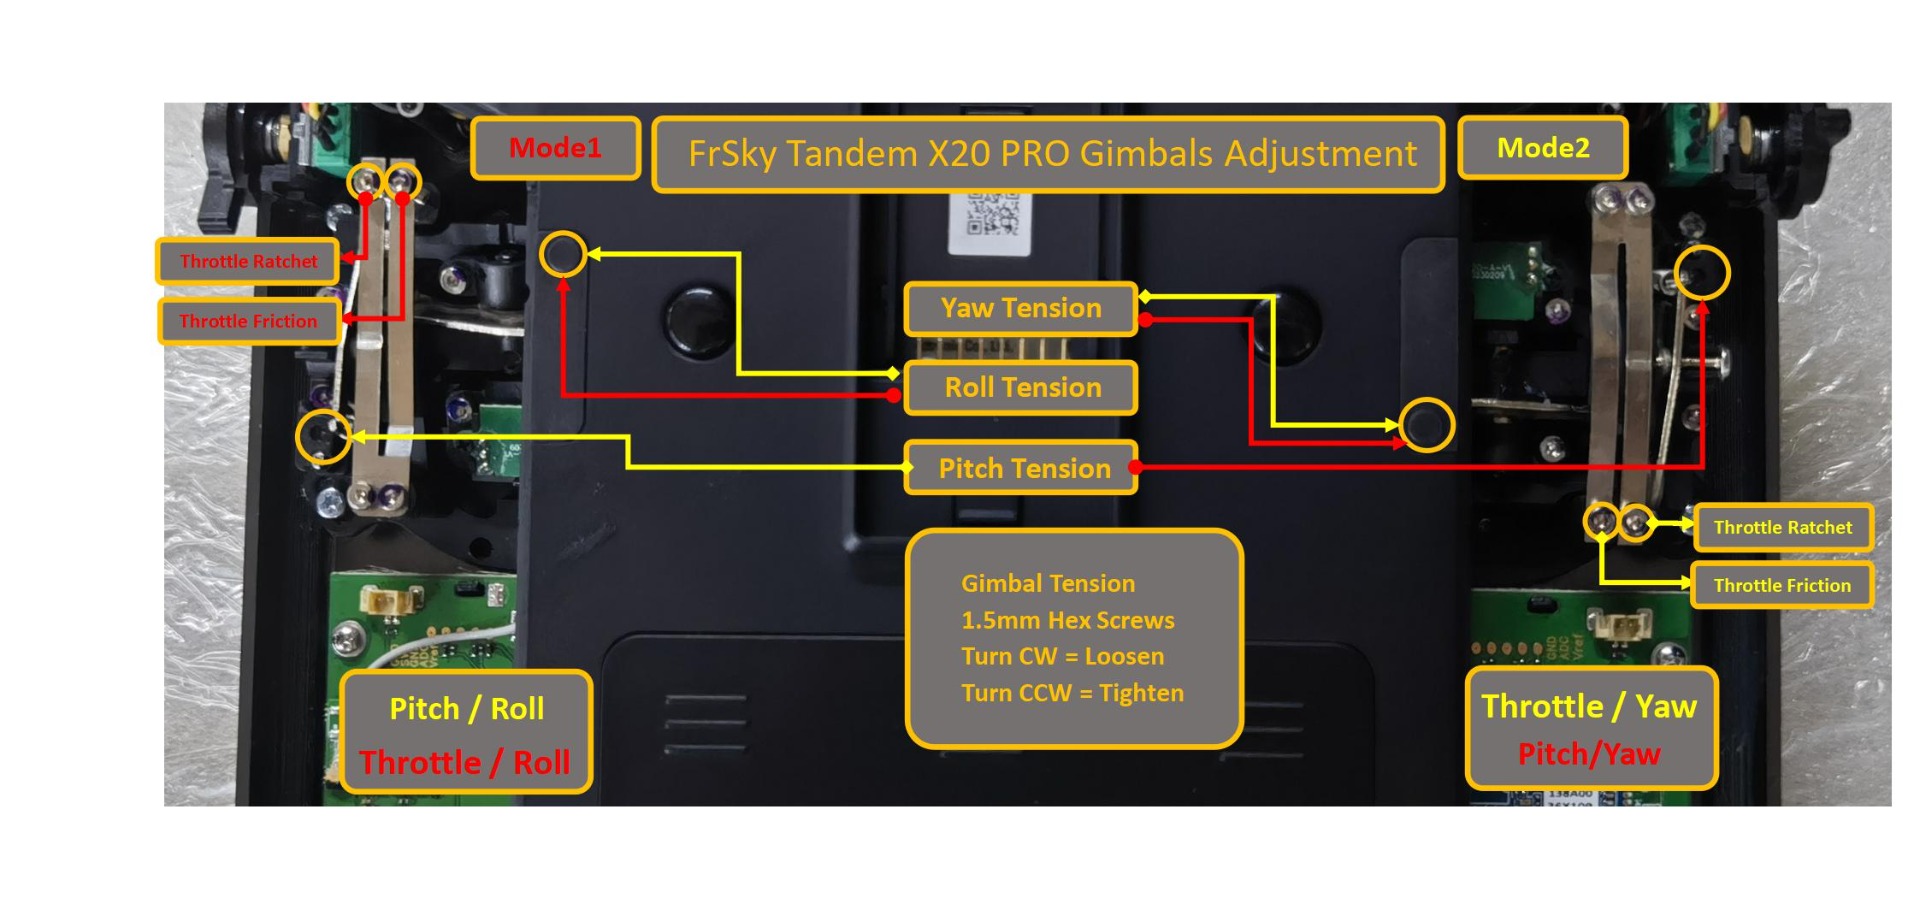 FrSky Tandem X20 Pro Combo, FrSky Tandem X20 PRO Gimbals Adjustment Mode2 Thrott